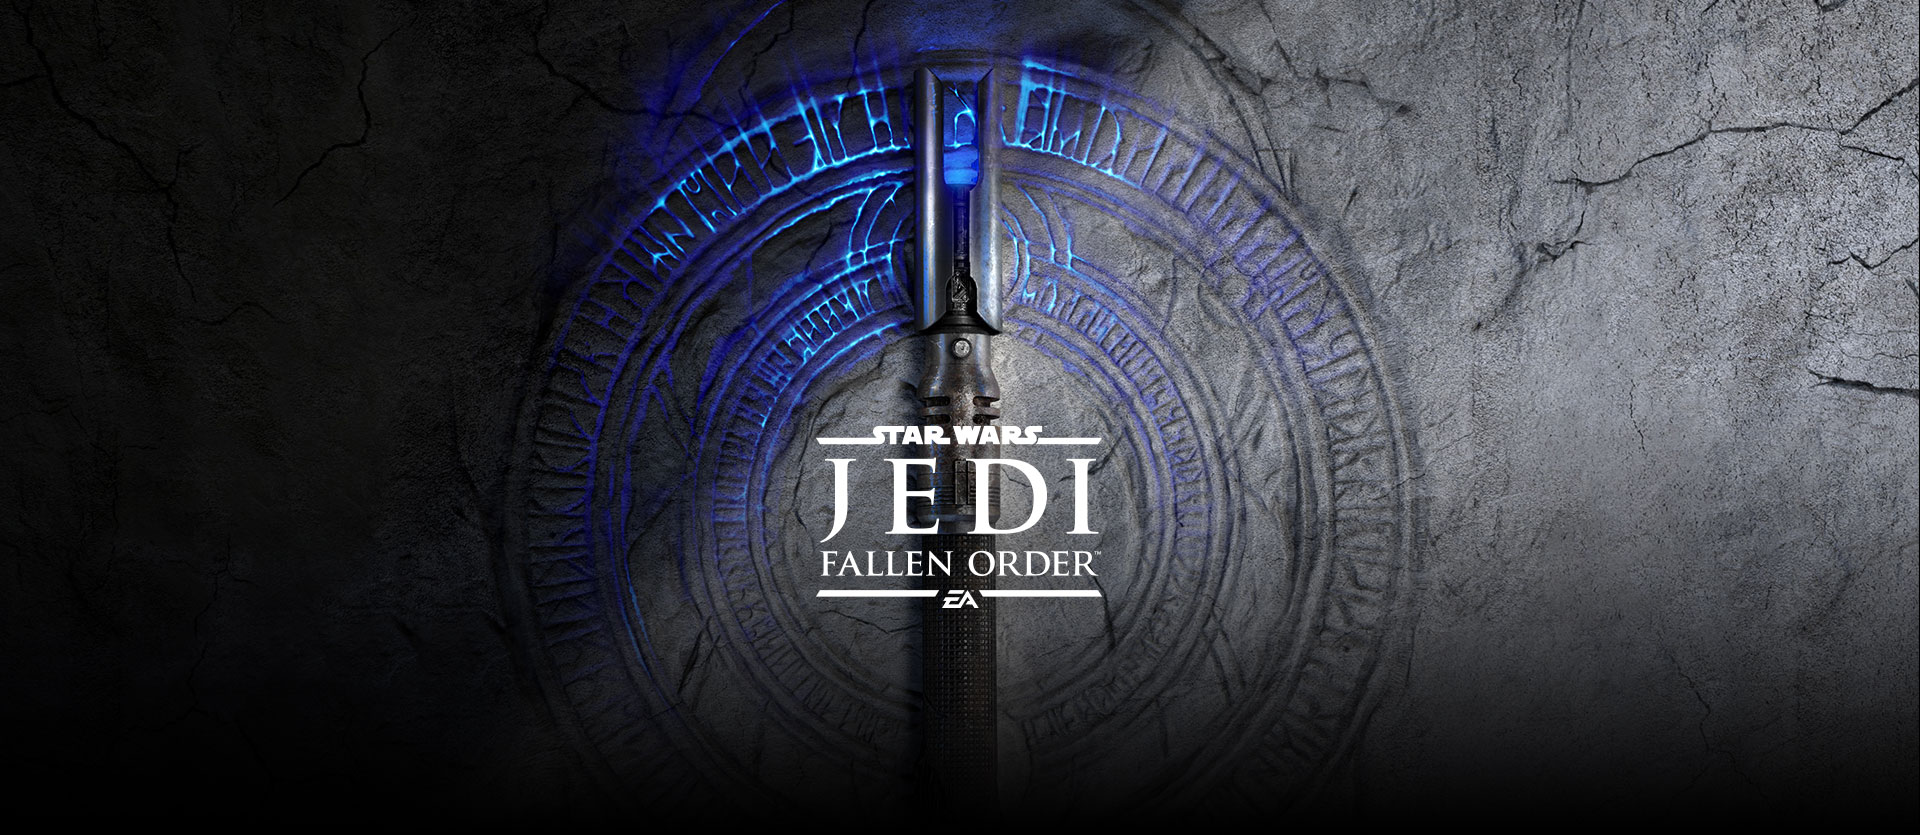 Star Wars Jedi: Fallen Order Trailer